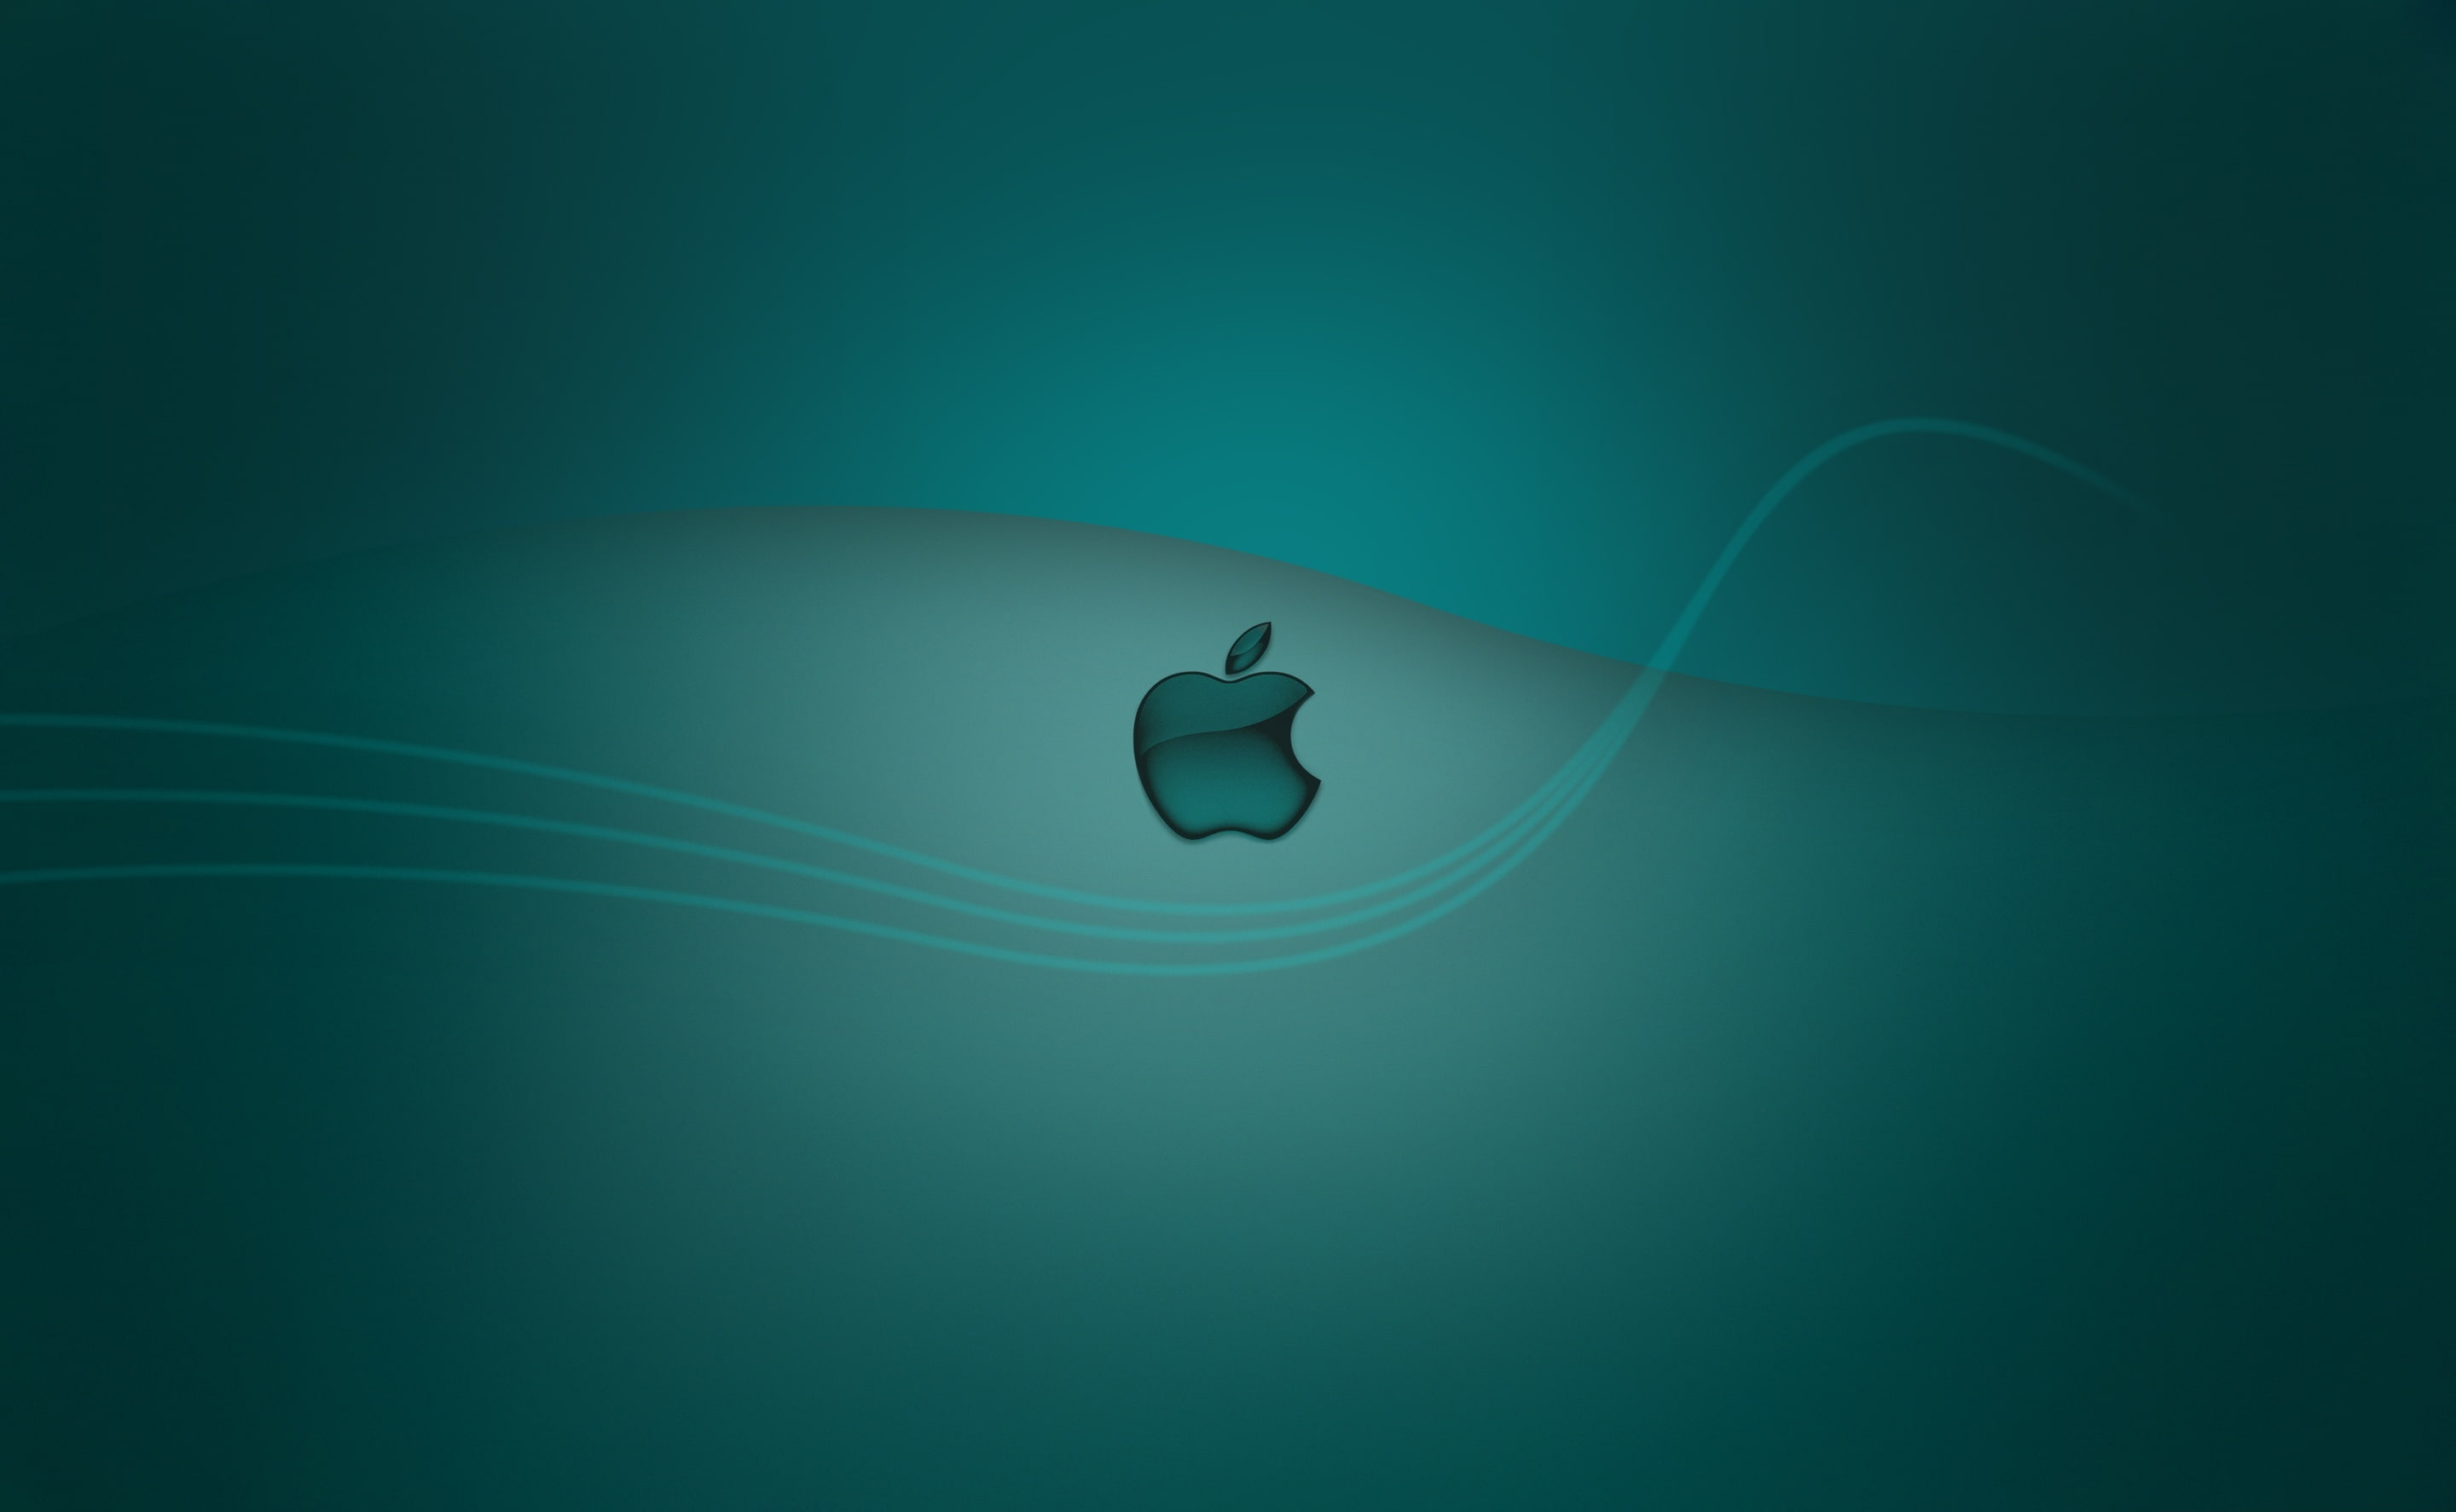 Apple Retina, green and white Apple logo digital wallpaper, Computers